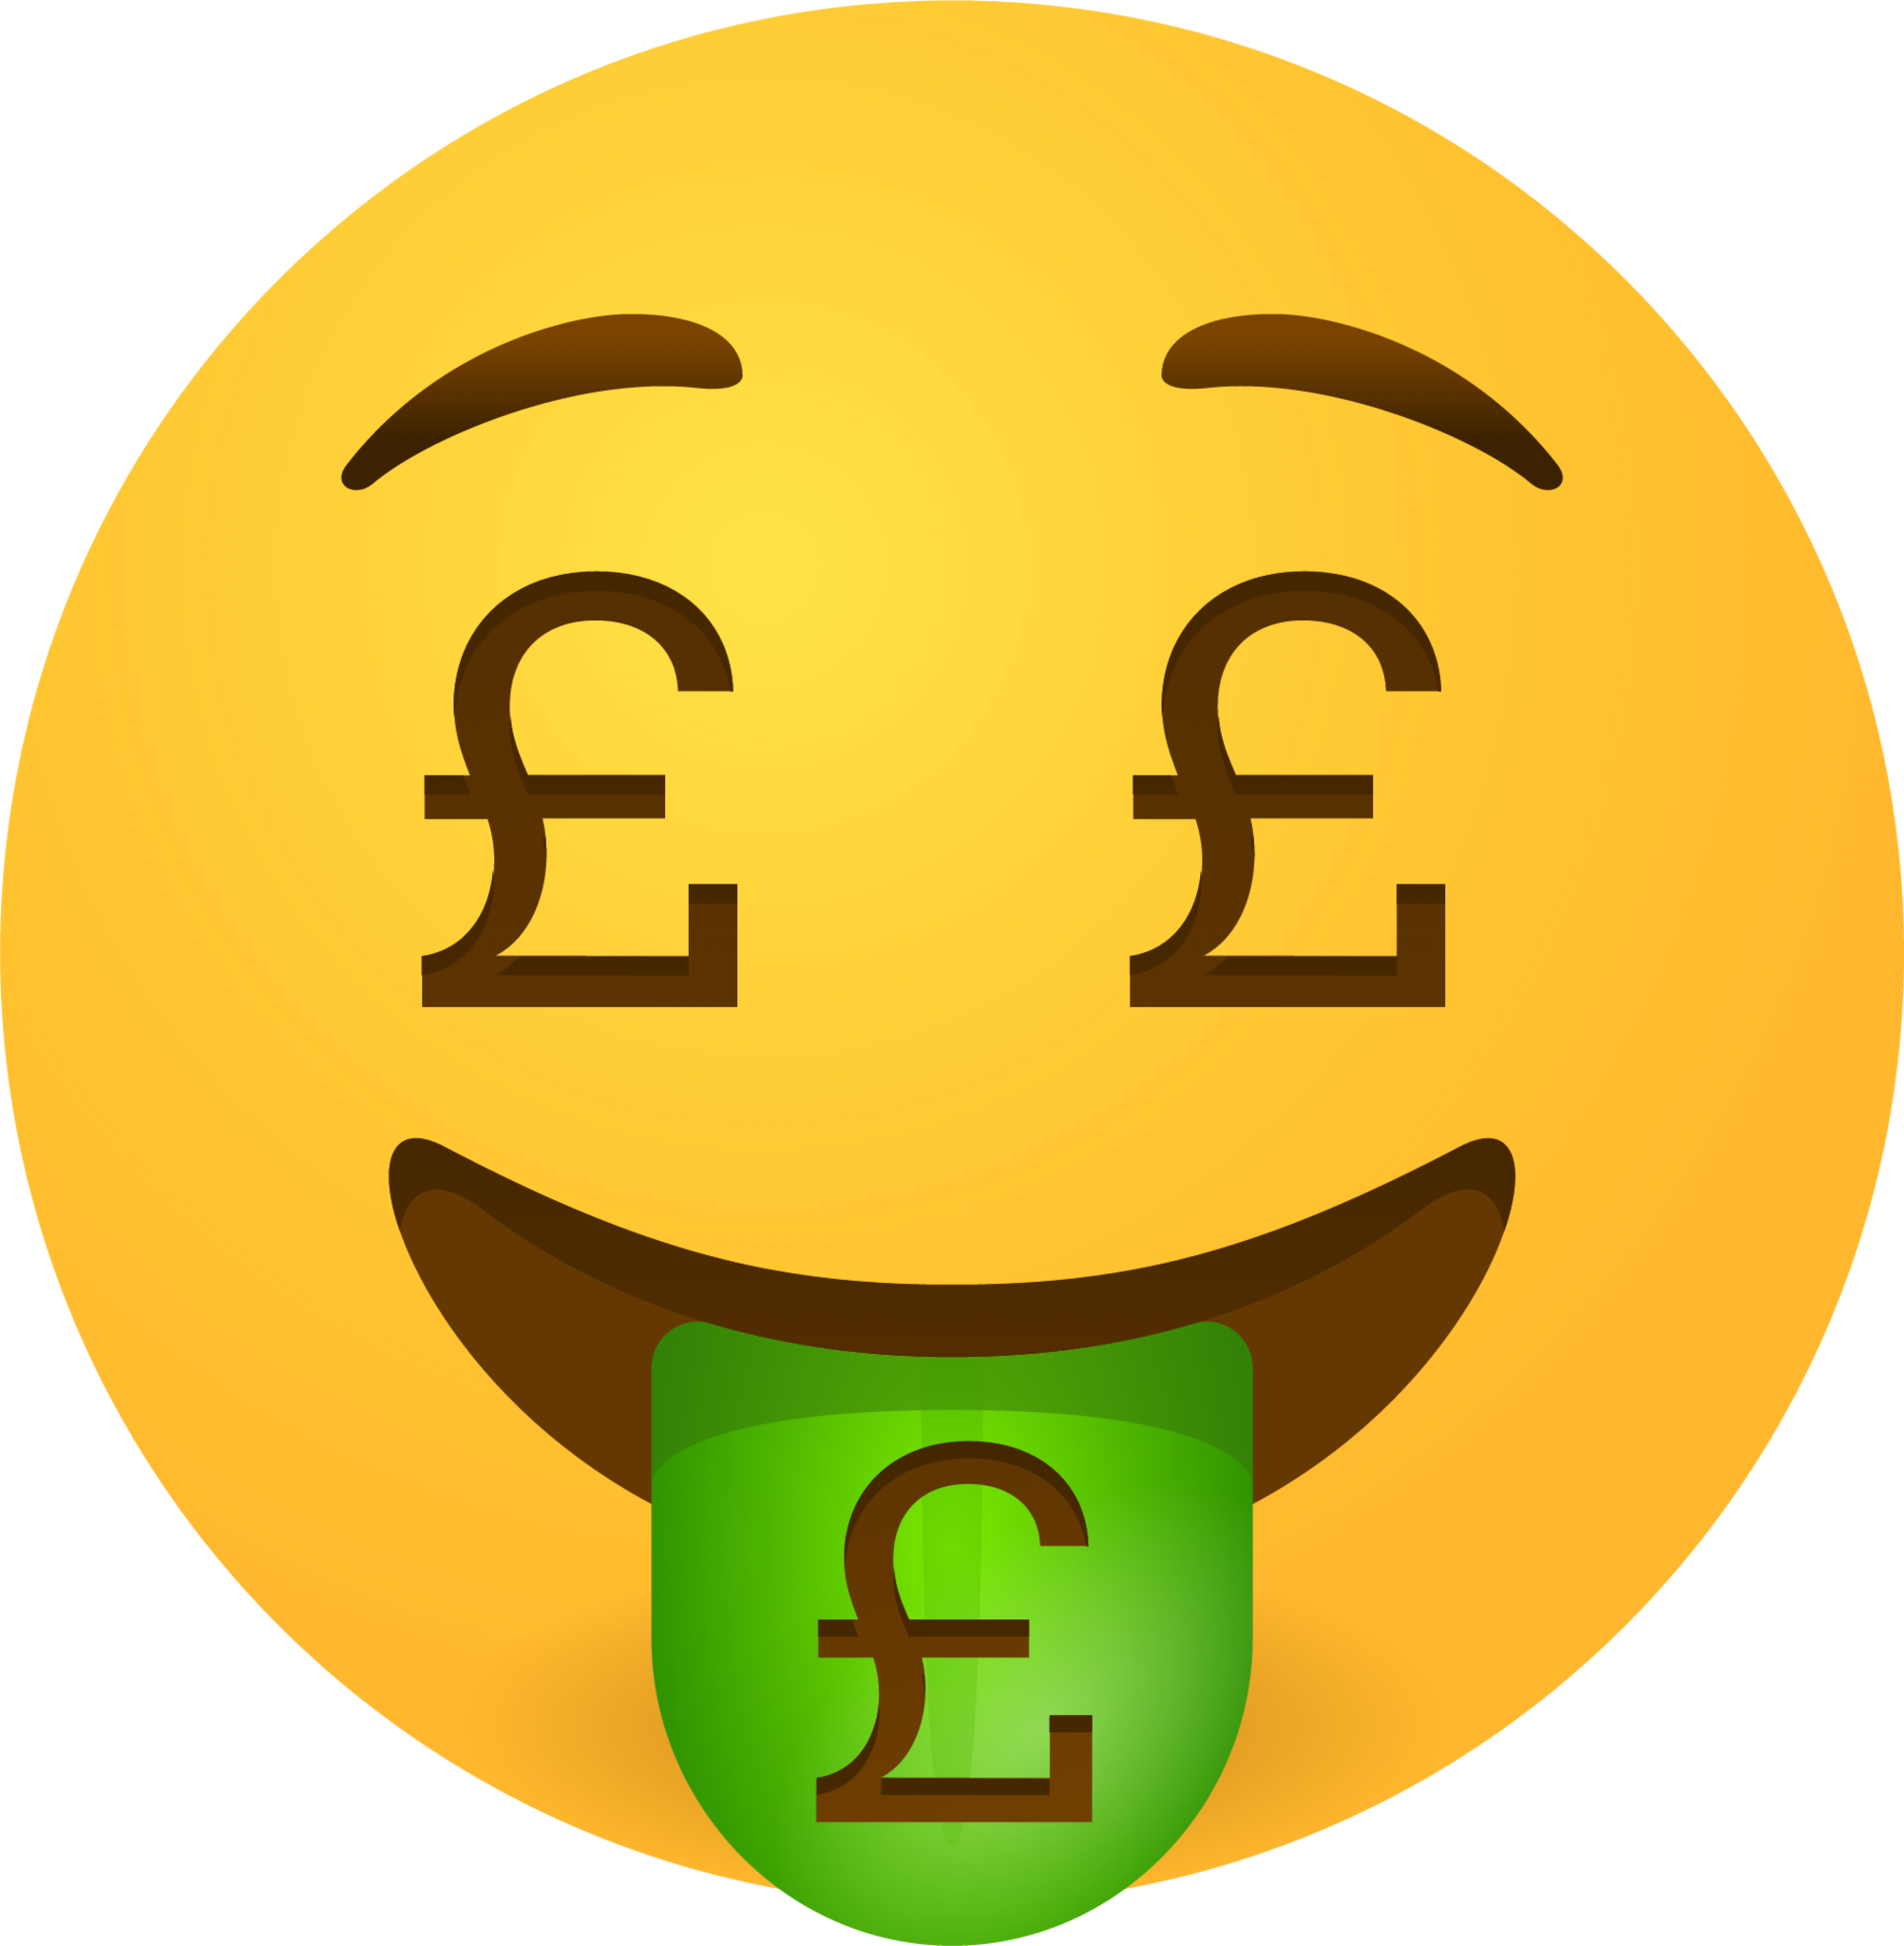 Money mouth face £ emoji emoji